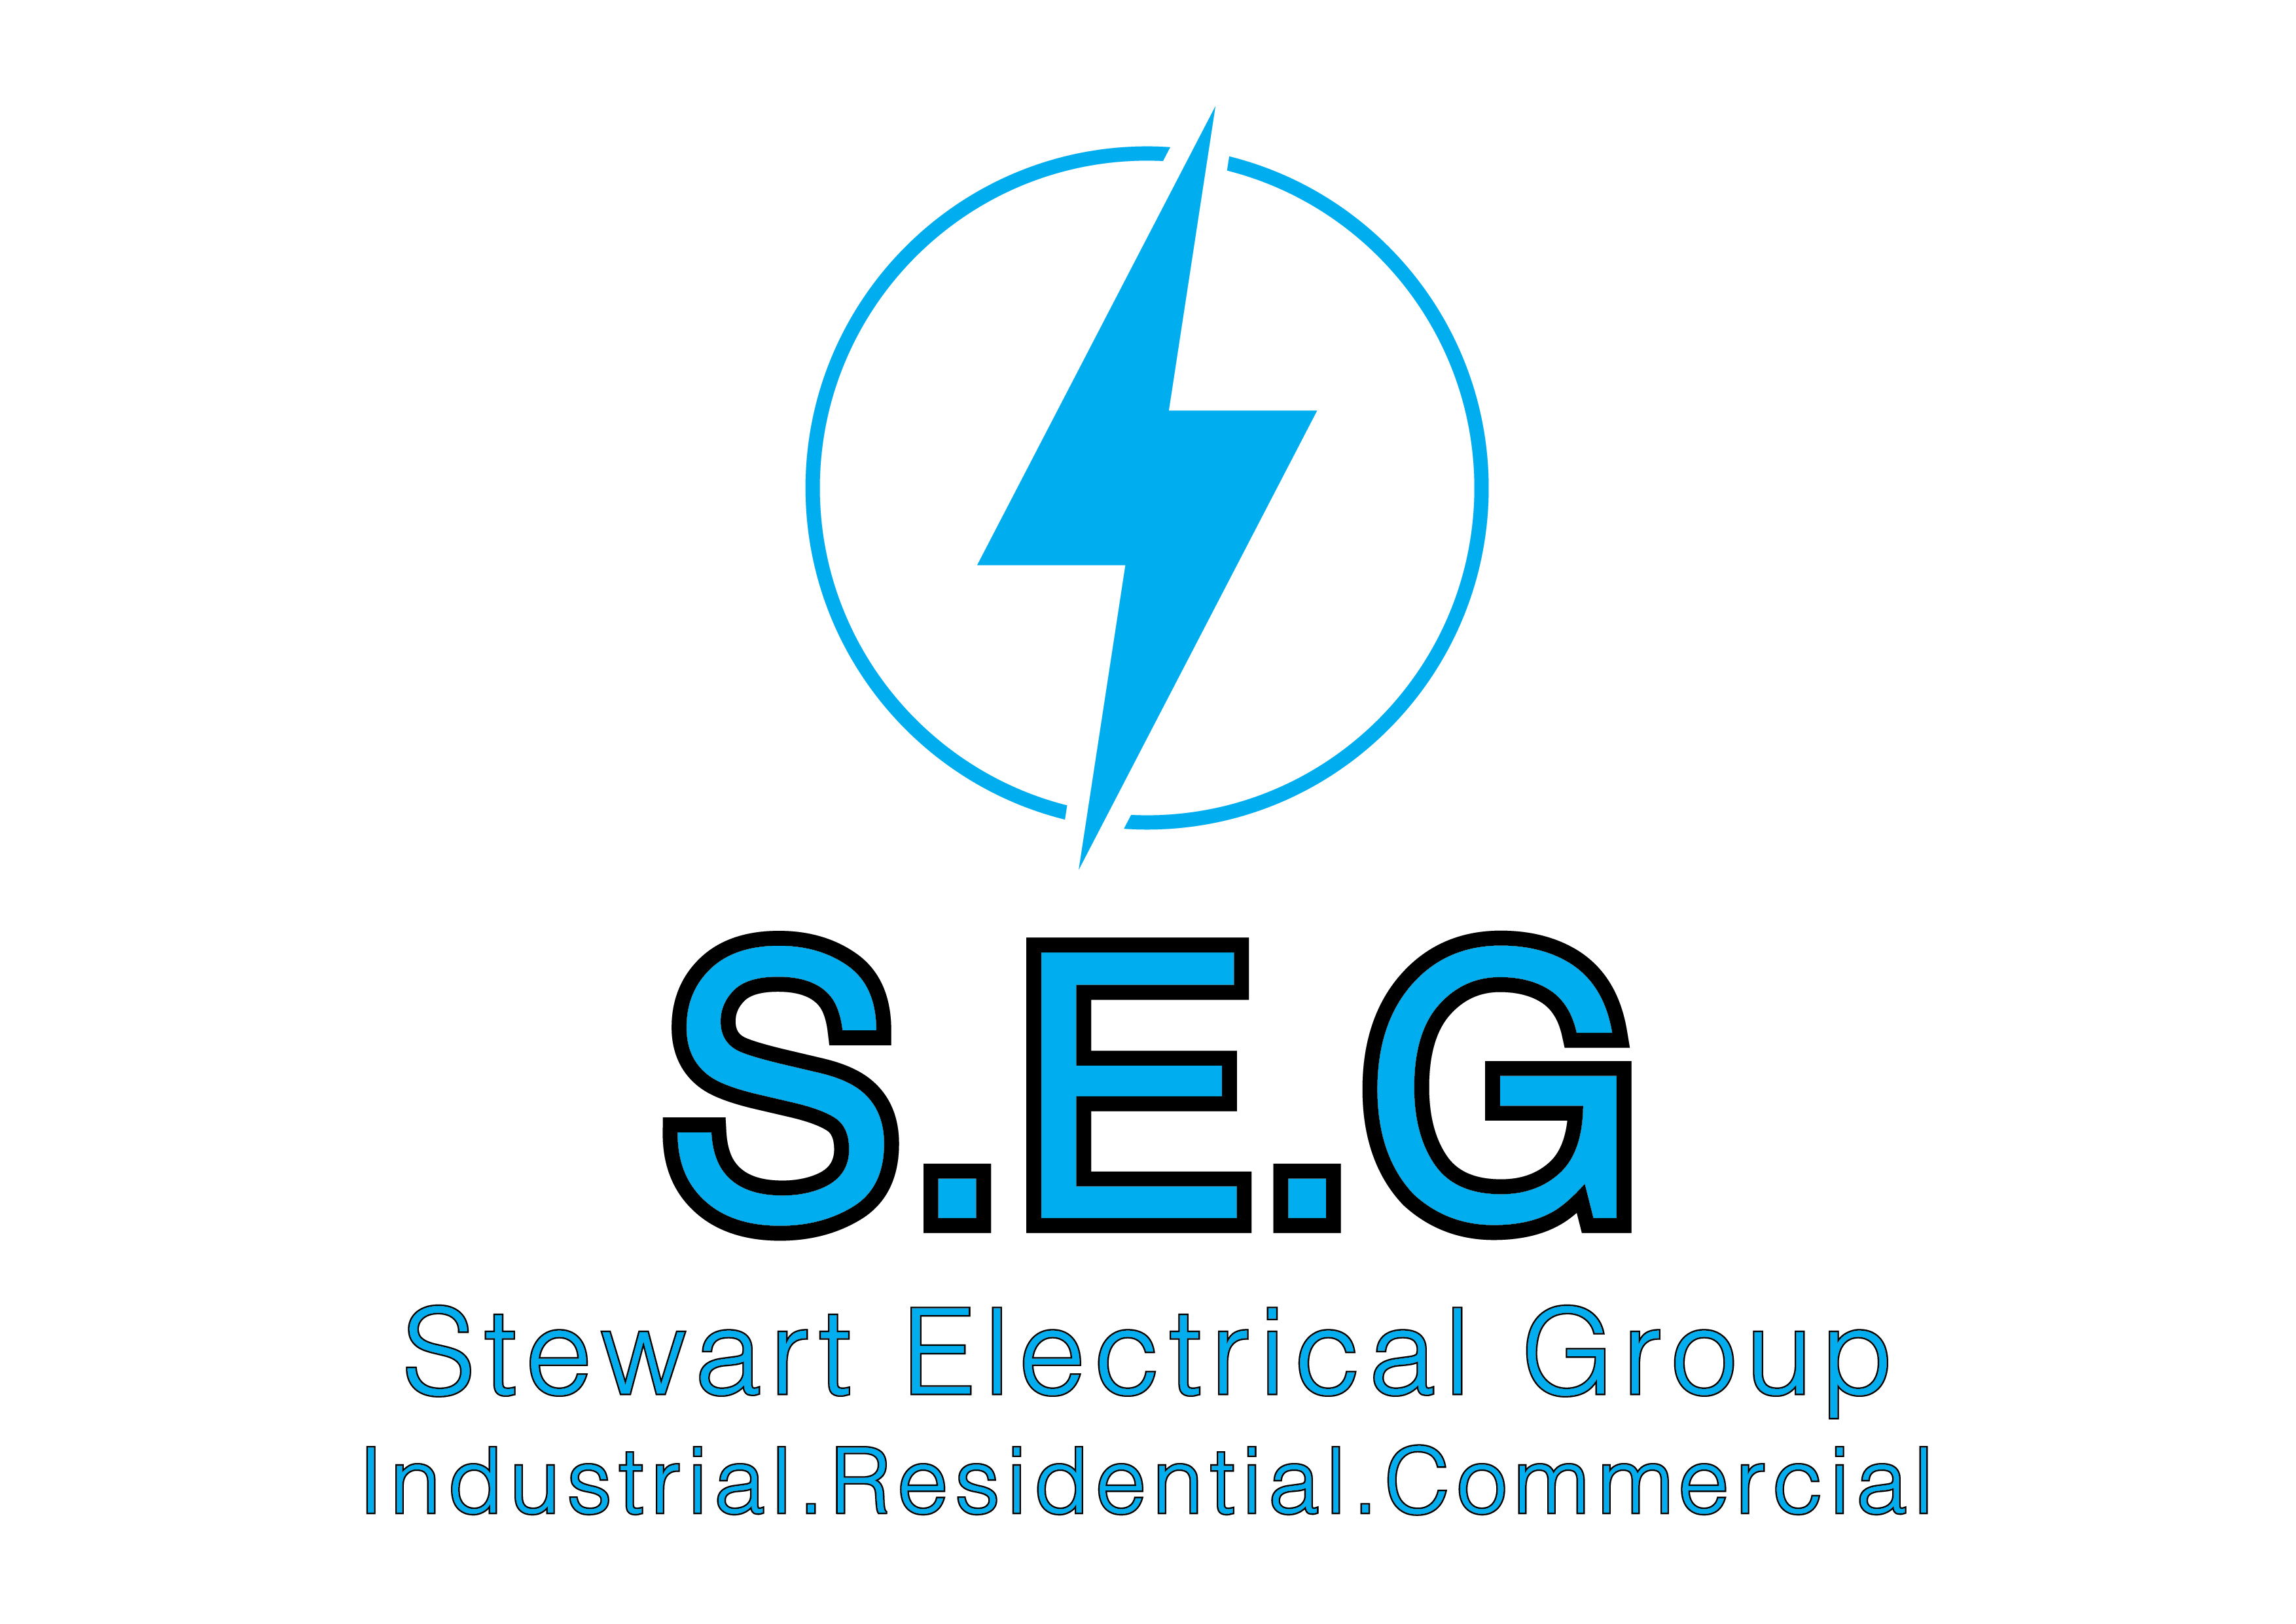 Stewart Electrical Group